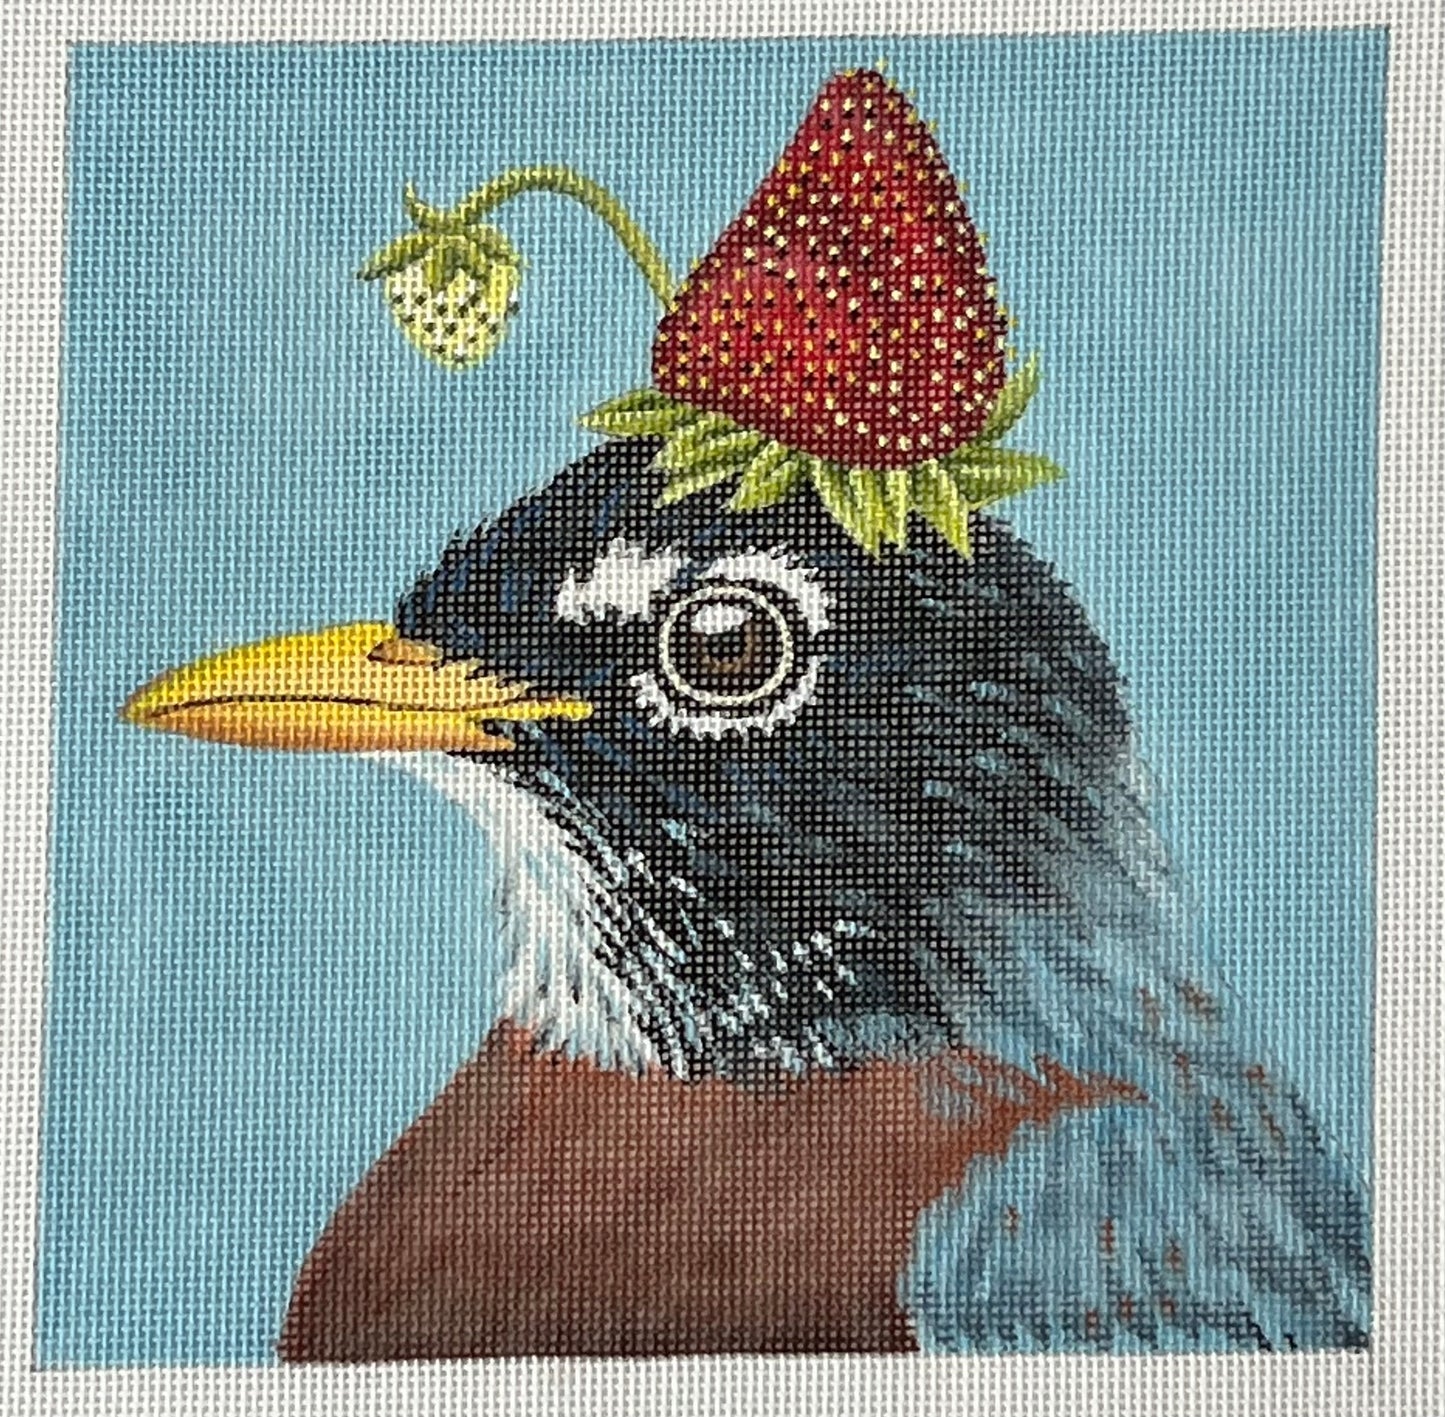 Bird with Strawberry